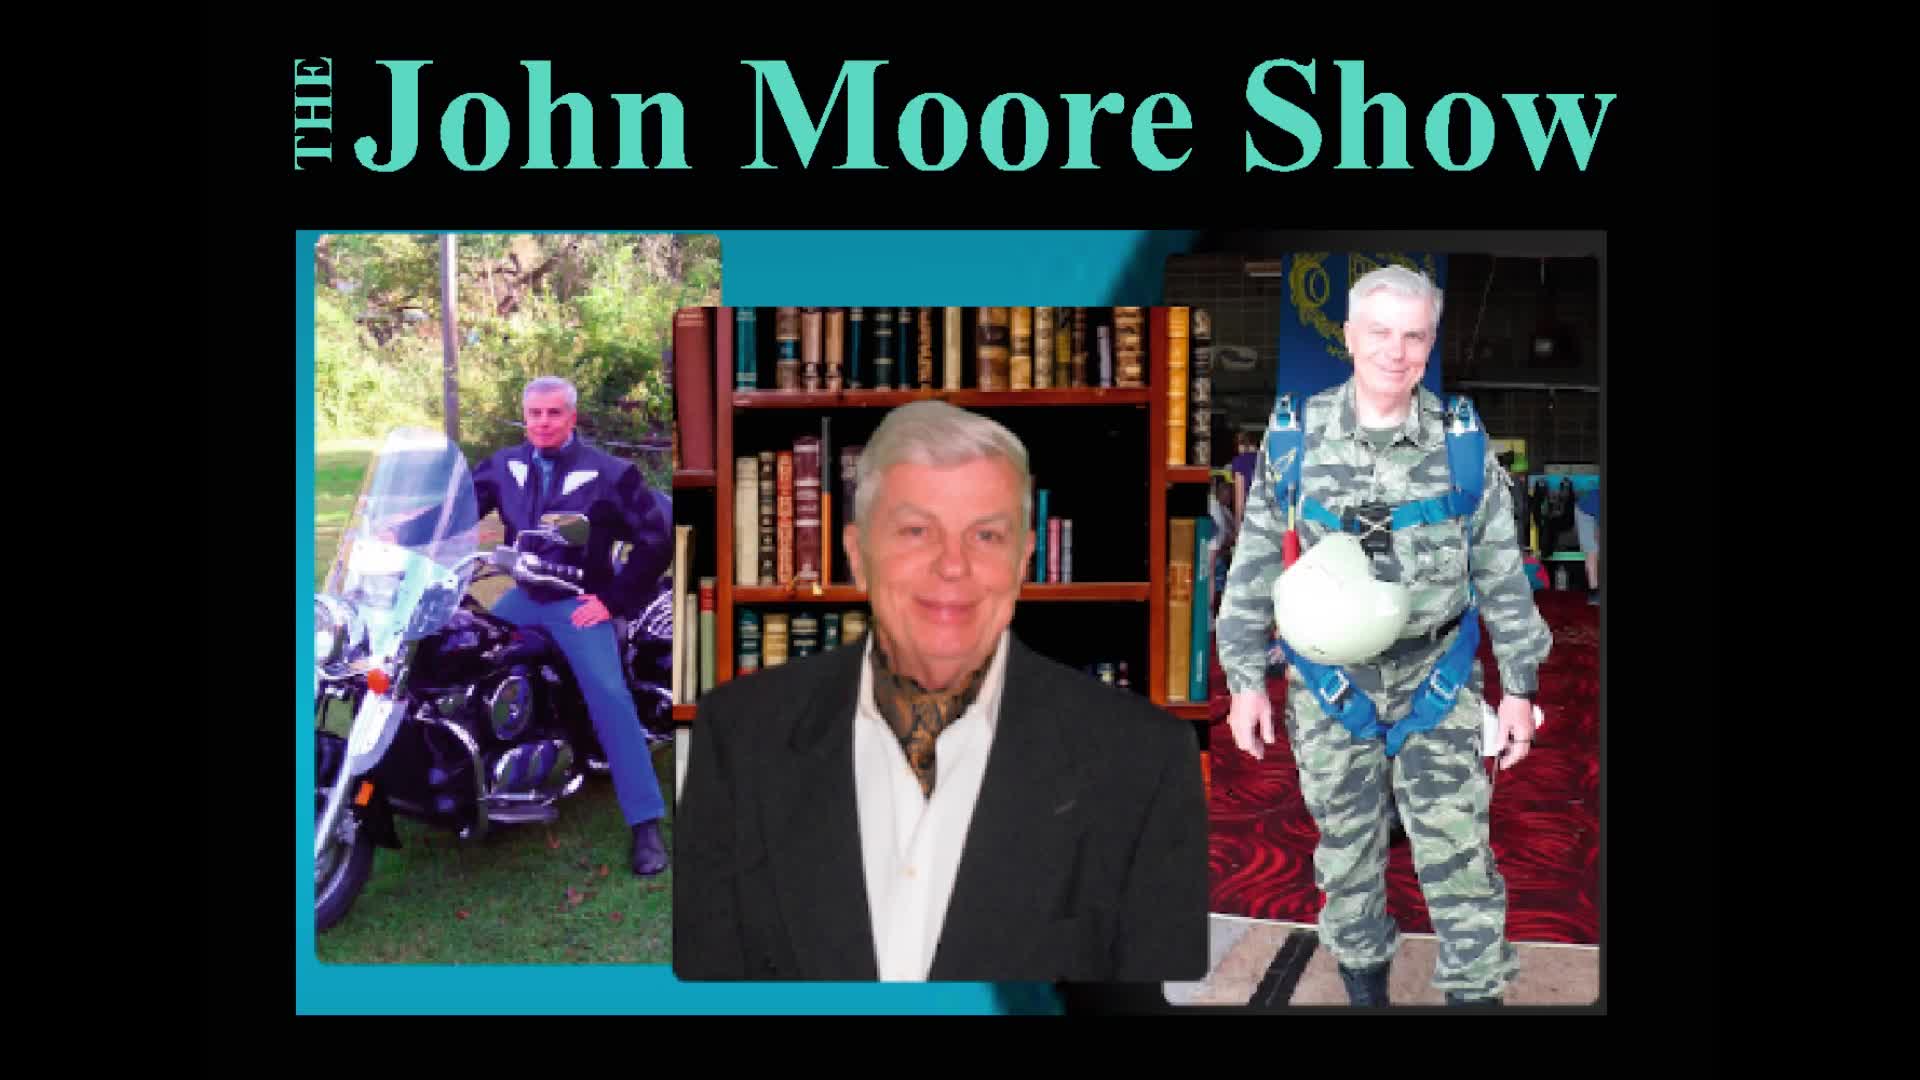 The John Moore Show on December 14, 2022